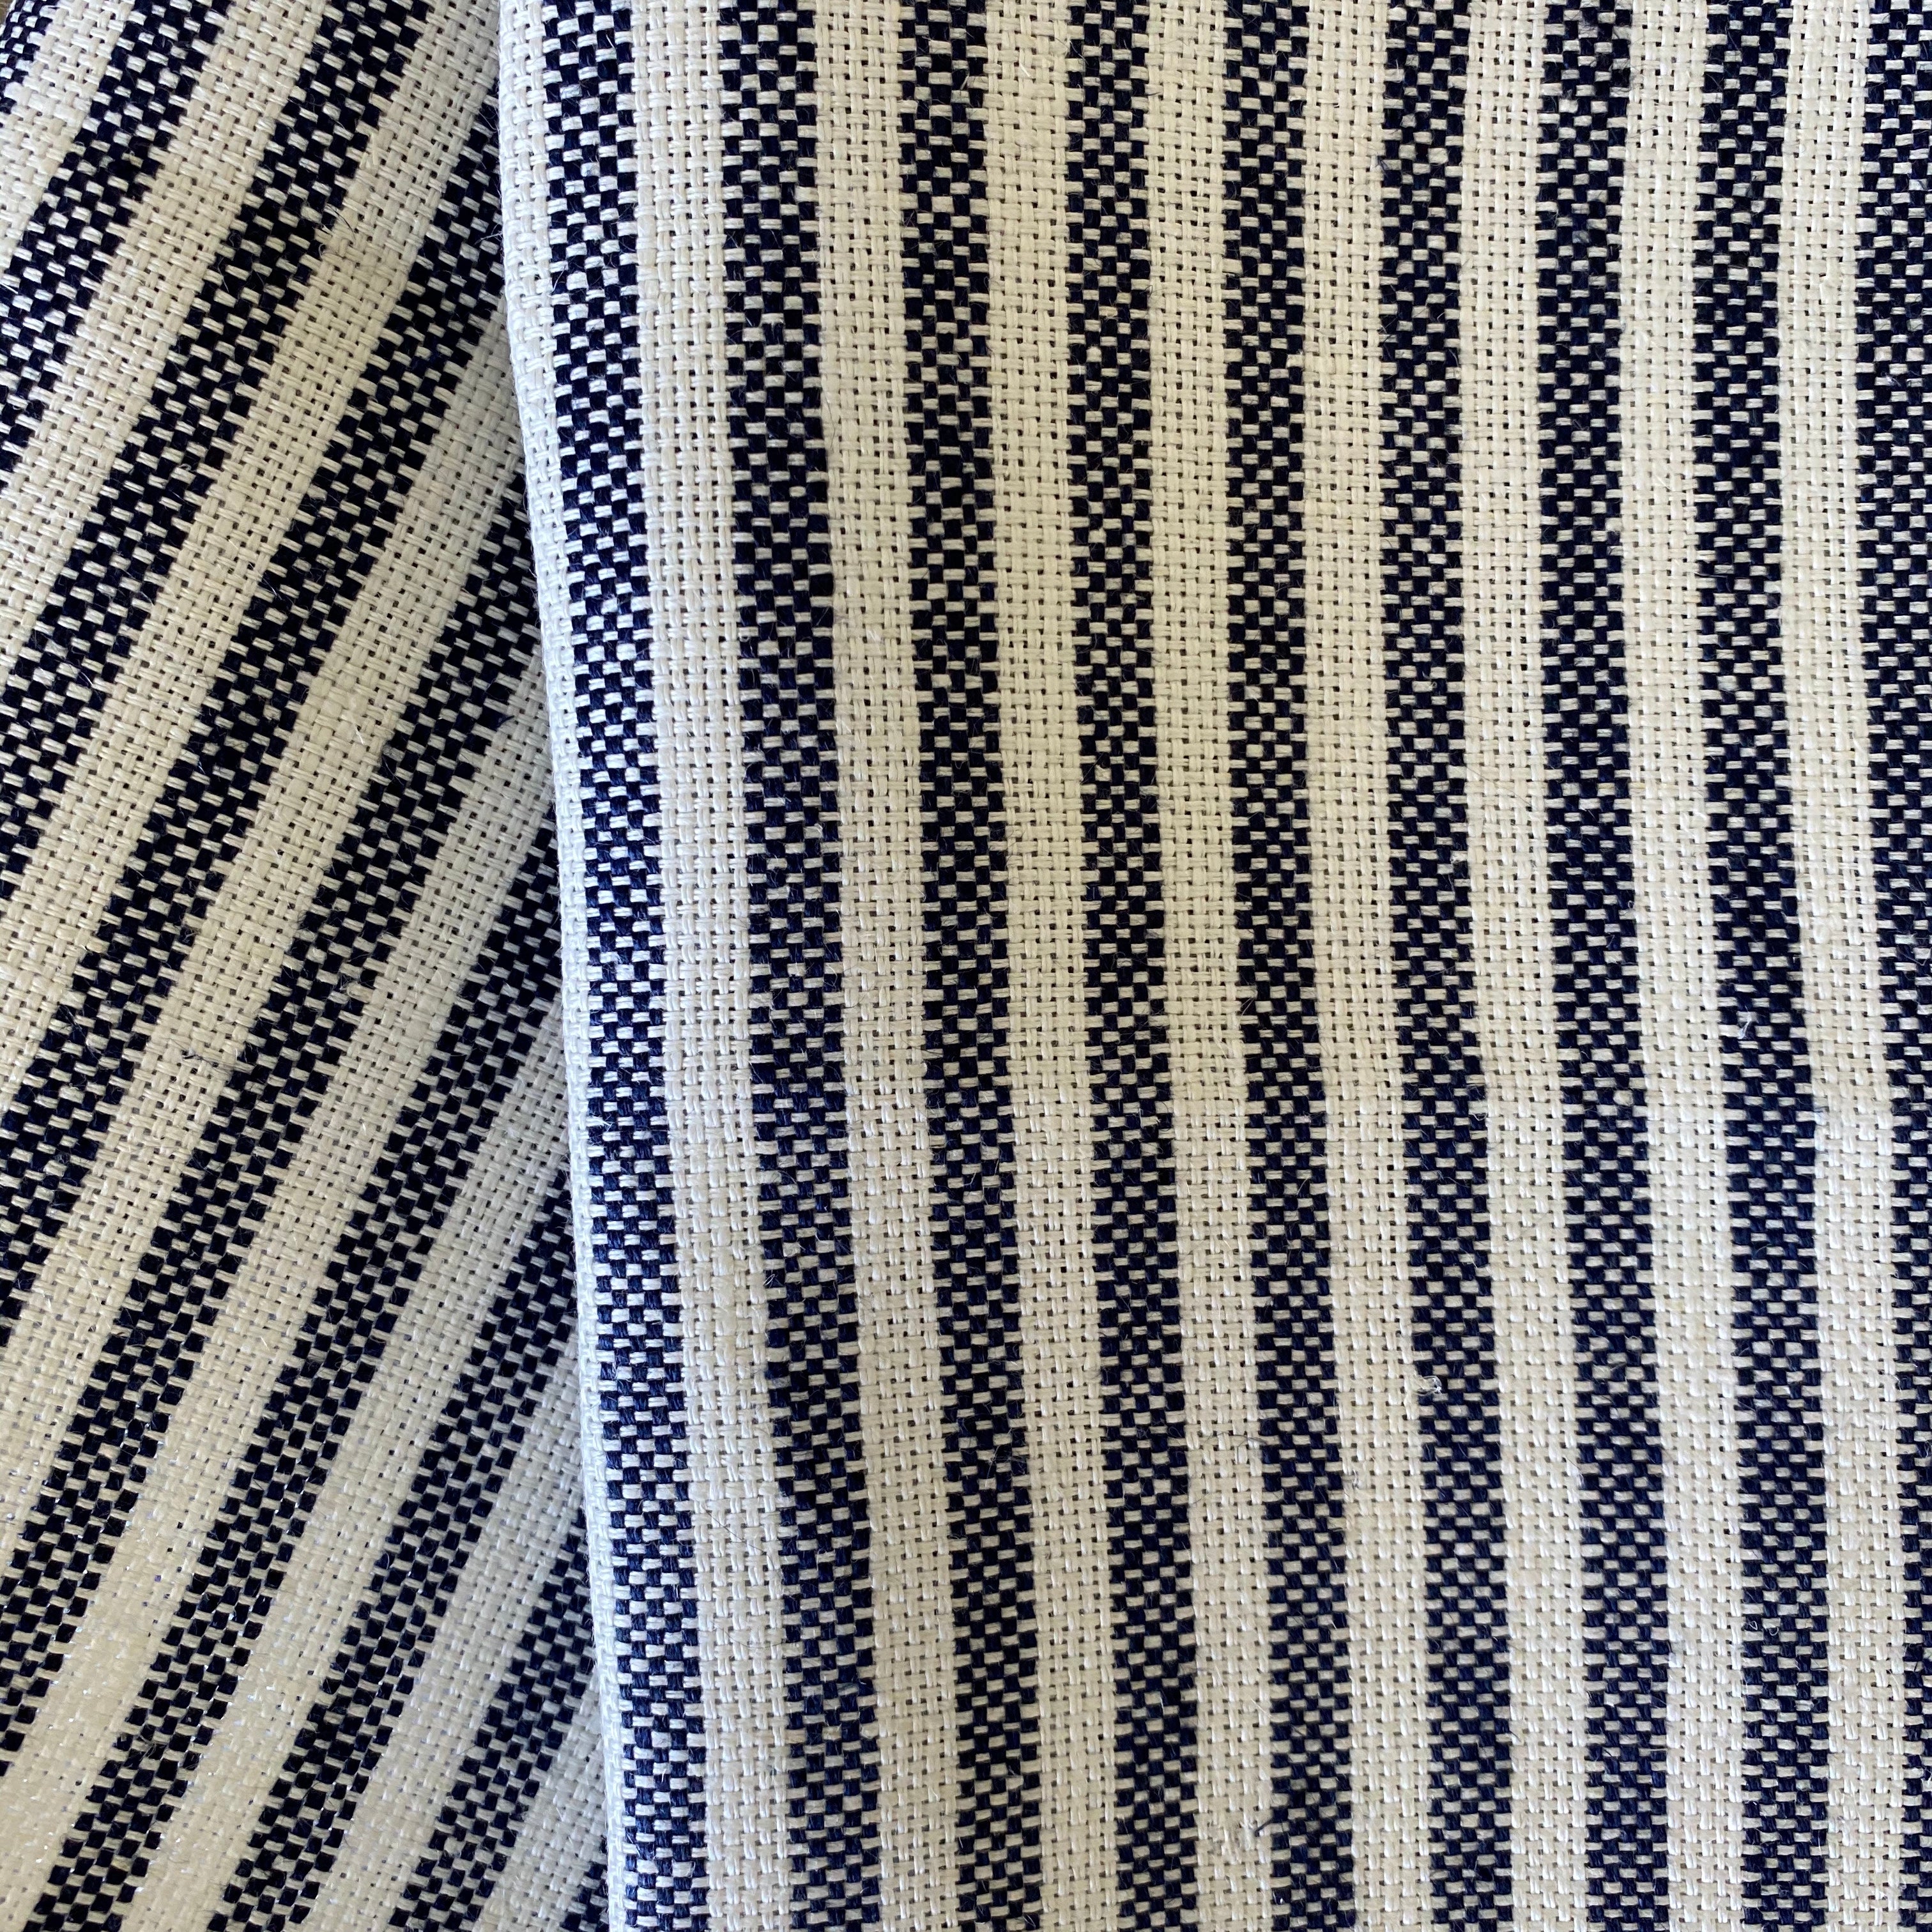 LINEN TOWEL / BLUE & WHITE WIDE STRIPES